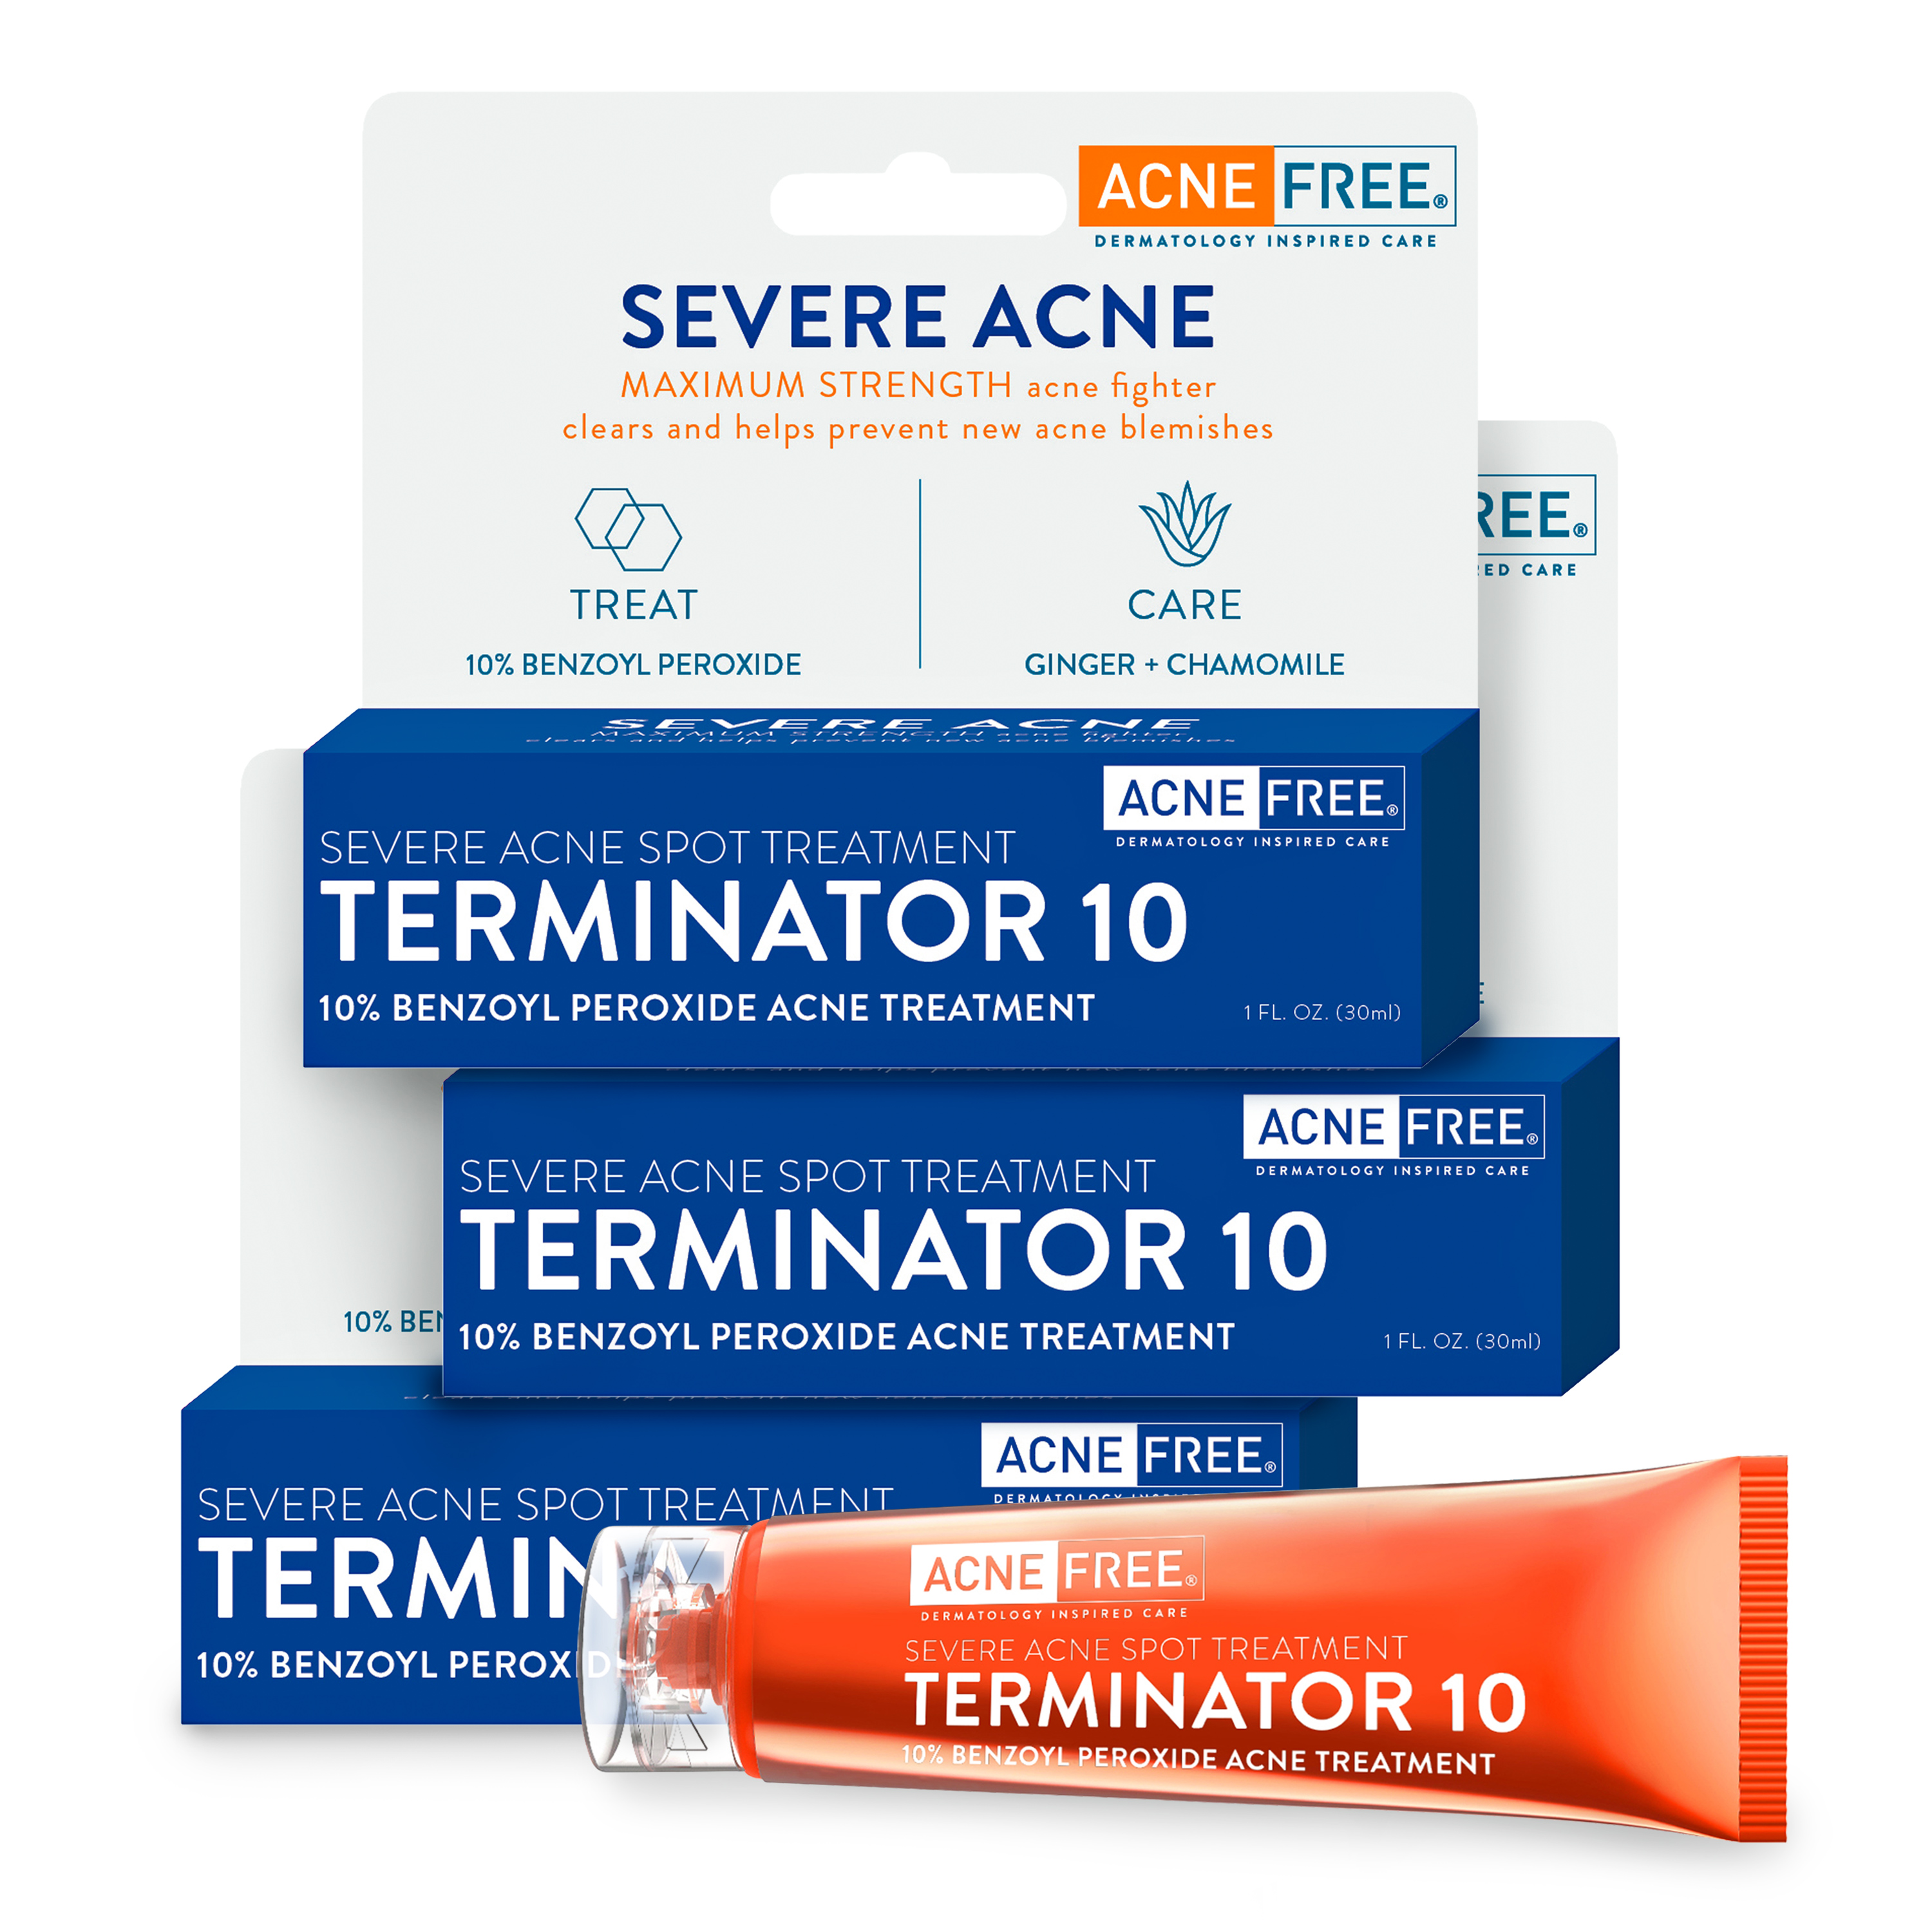 AcneFree Terminator 10 Acne Spot Treatment Cream with 10% Benzoyl Peroxide, 1 fl oz - image 2 of 11